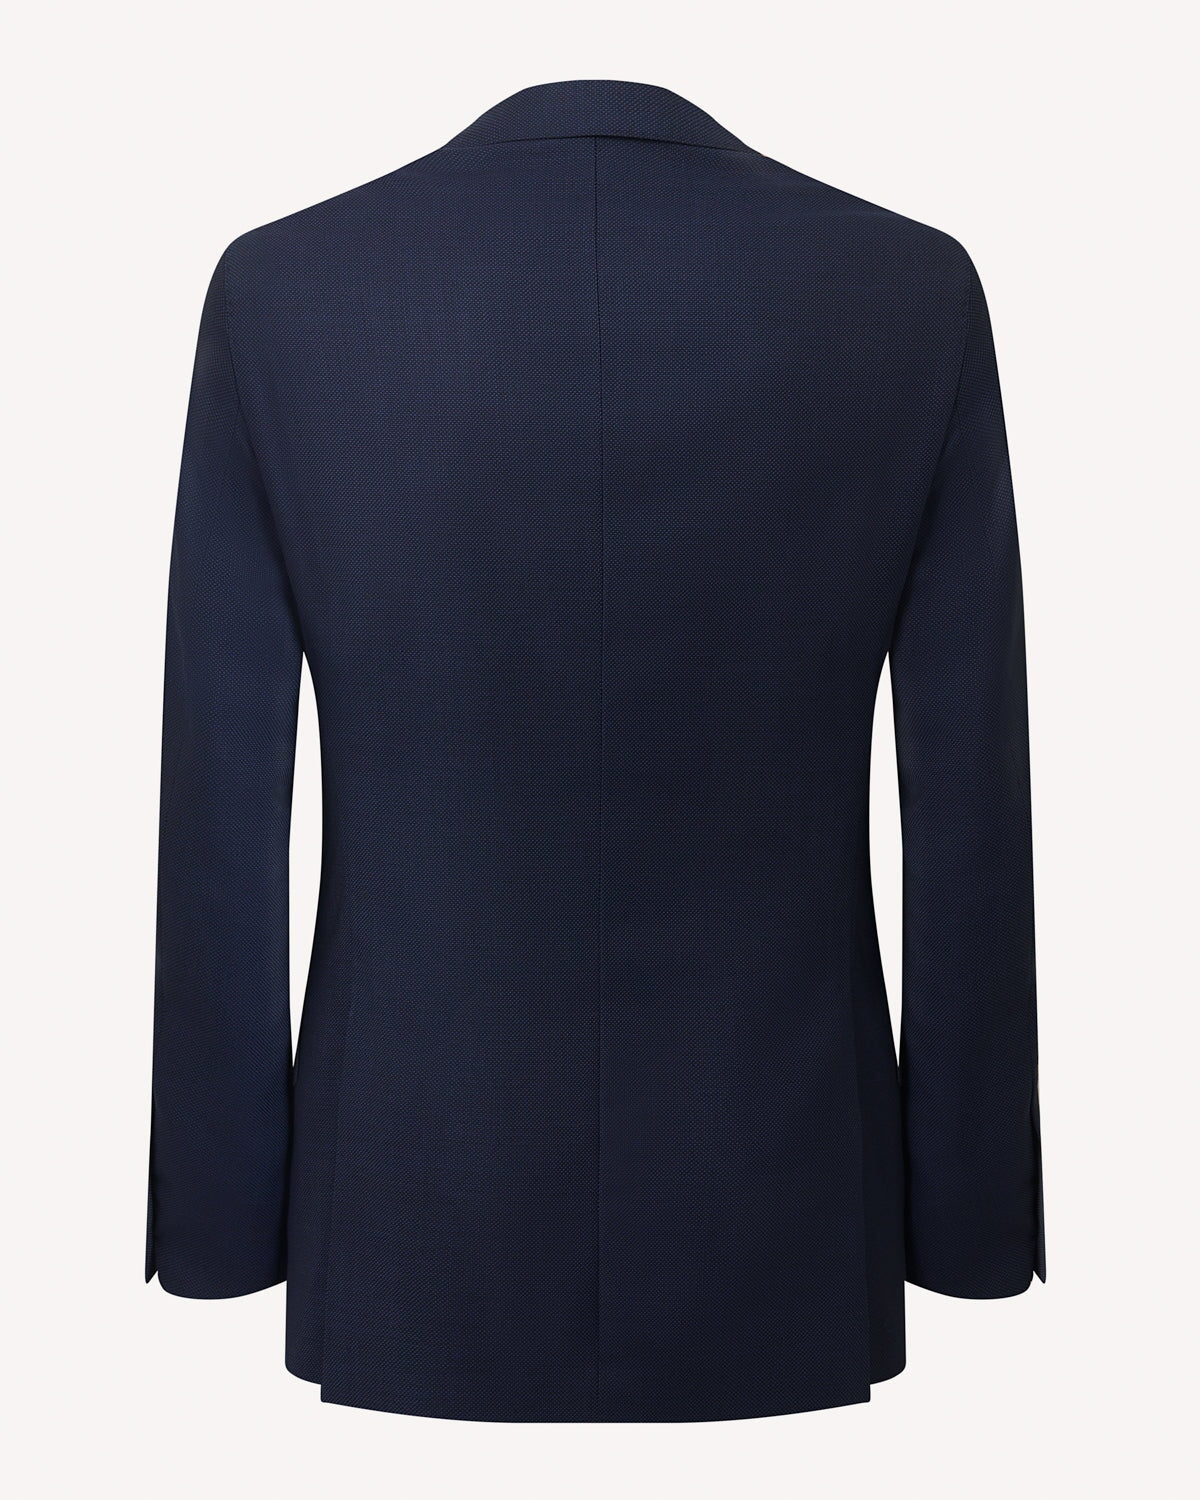 Kilgour Savile Row Tailoring SB1 KG Single Breasted Navy Birdseye Suit